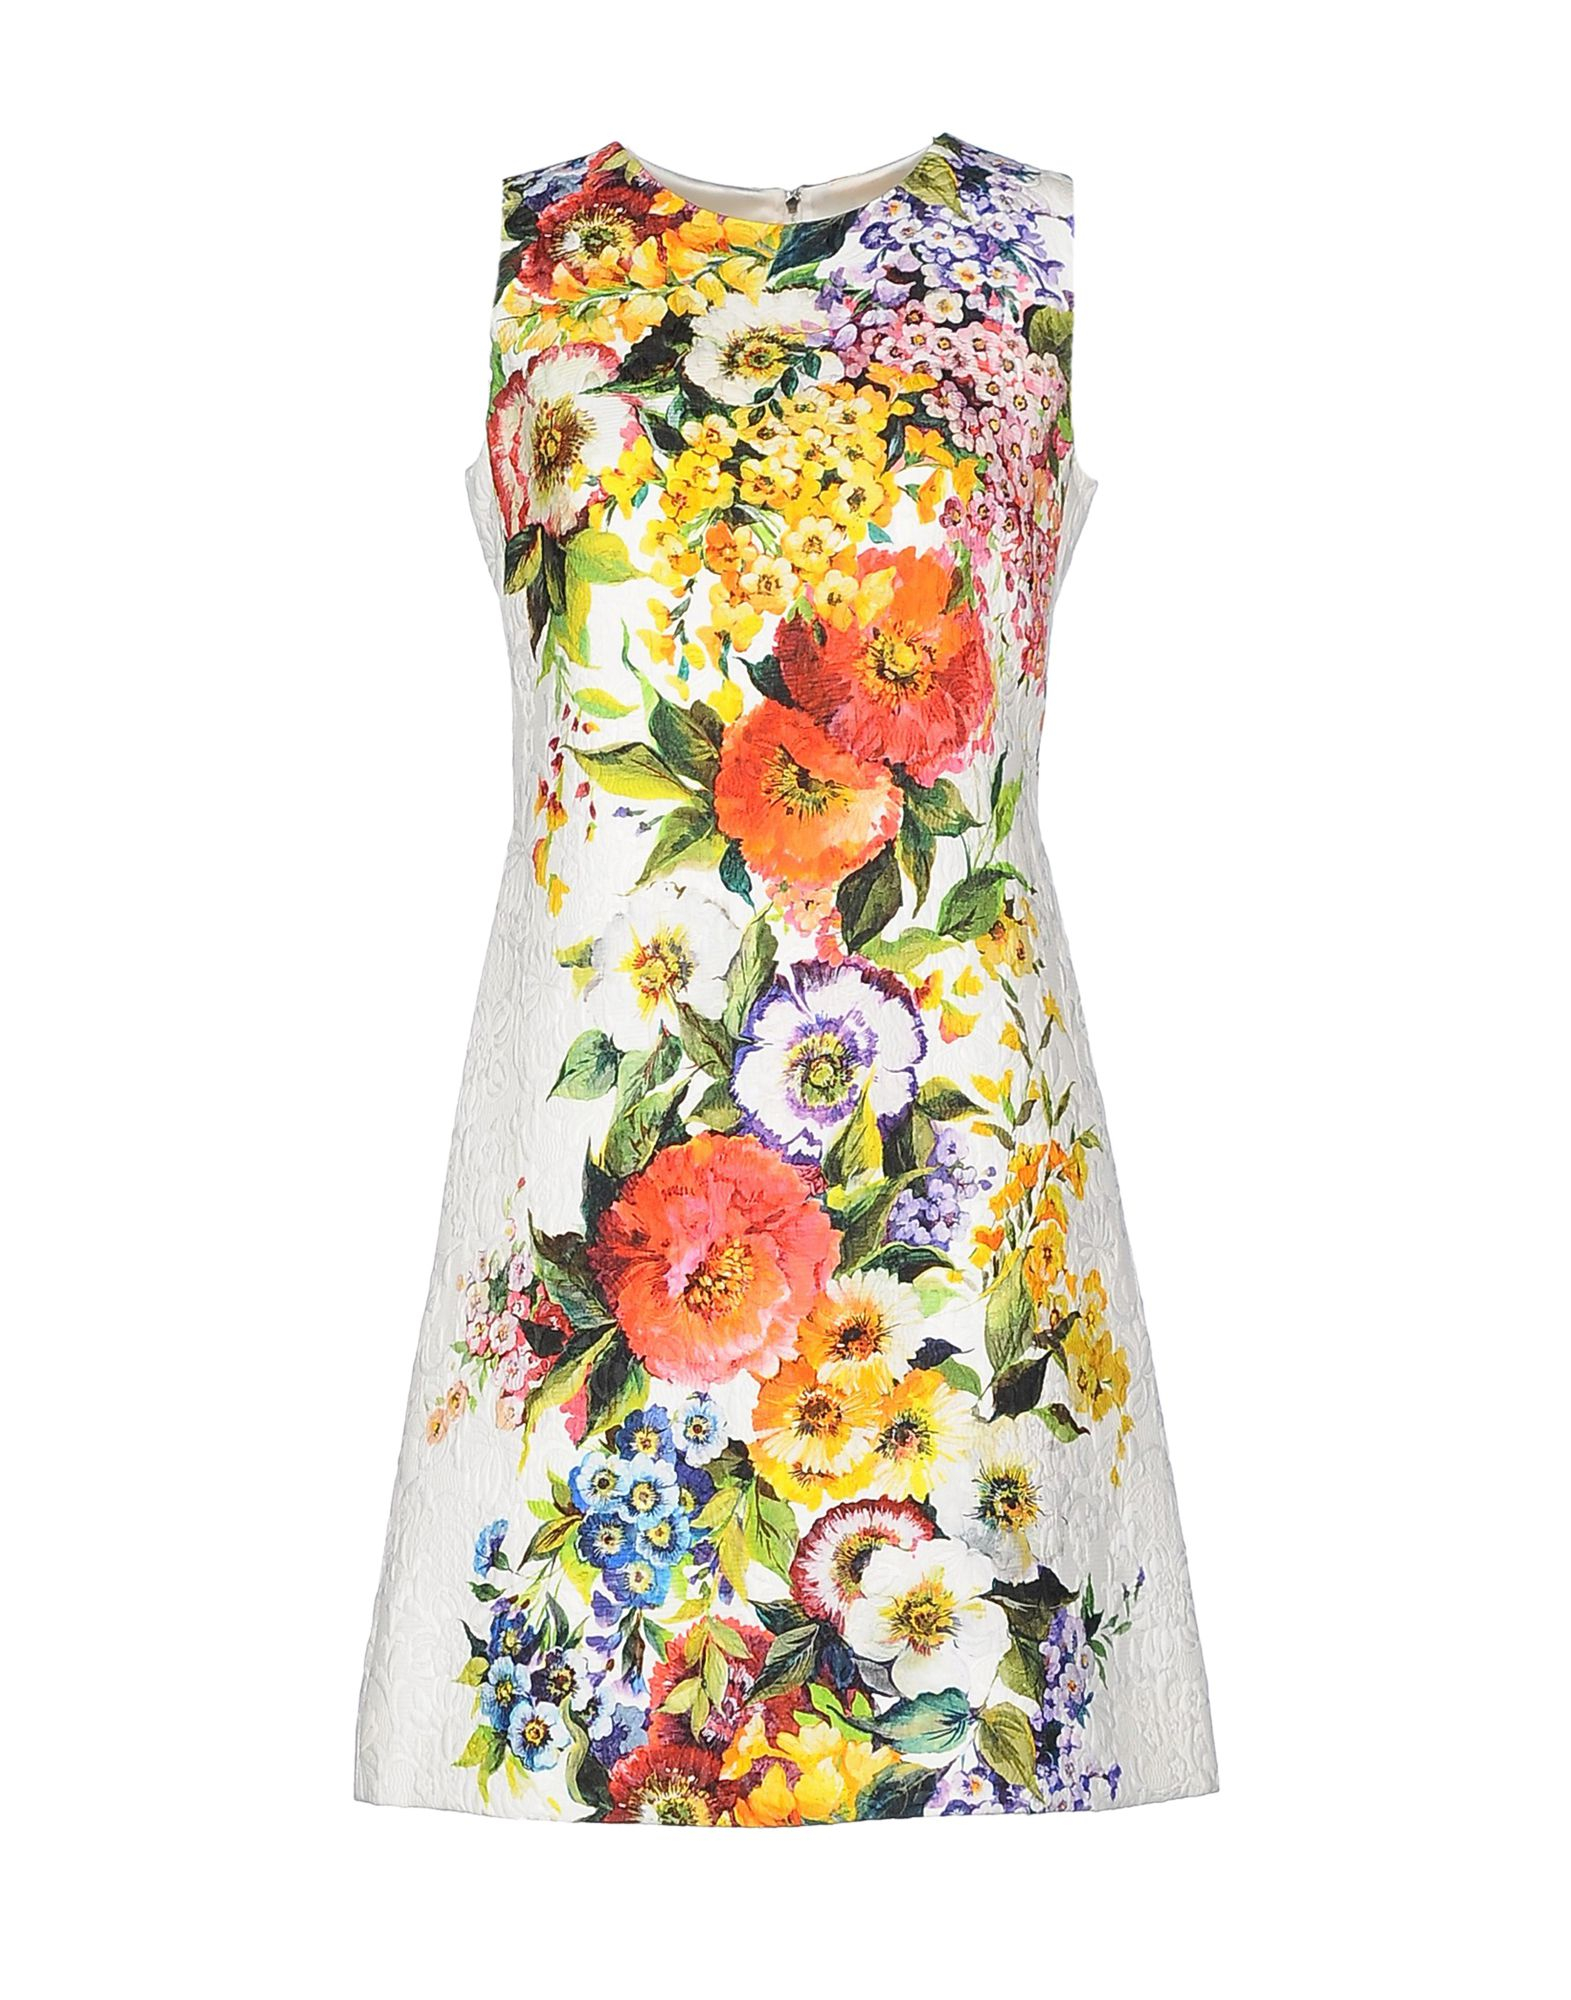 Lyst - Dolce & Gabbana Flower Print Dress in Yellow